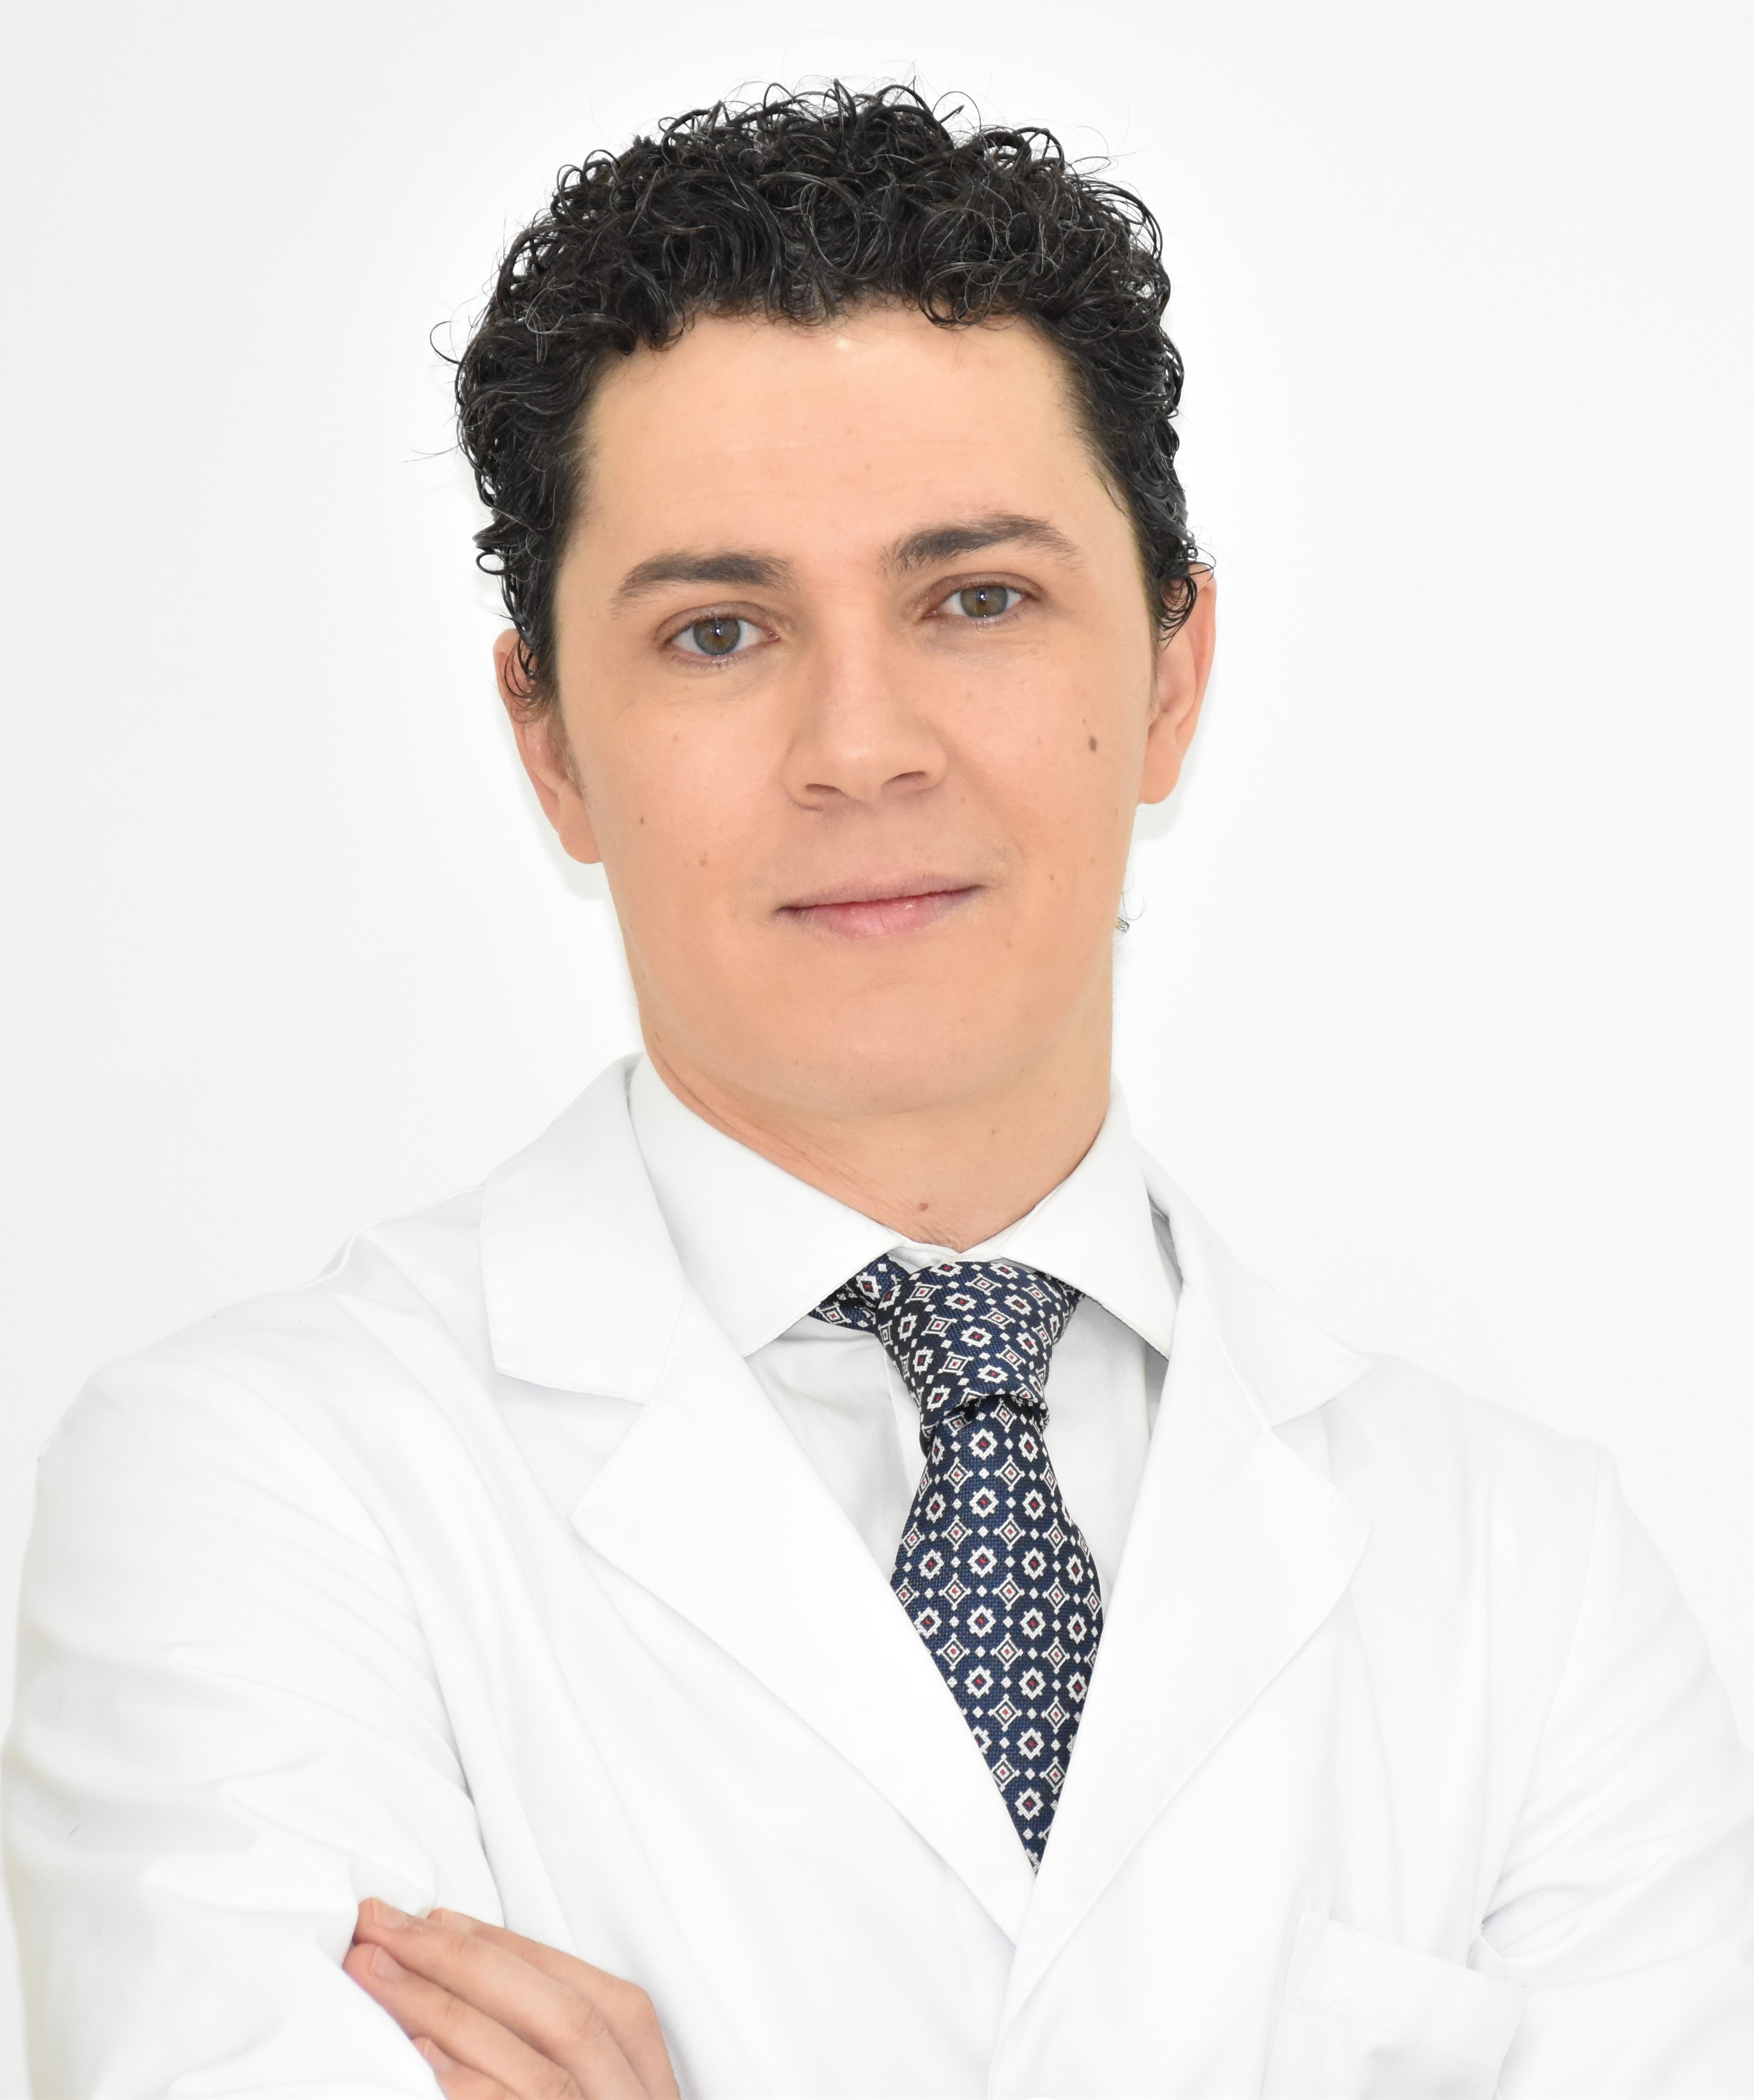 Dr. Marco Amaya Benítez